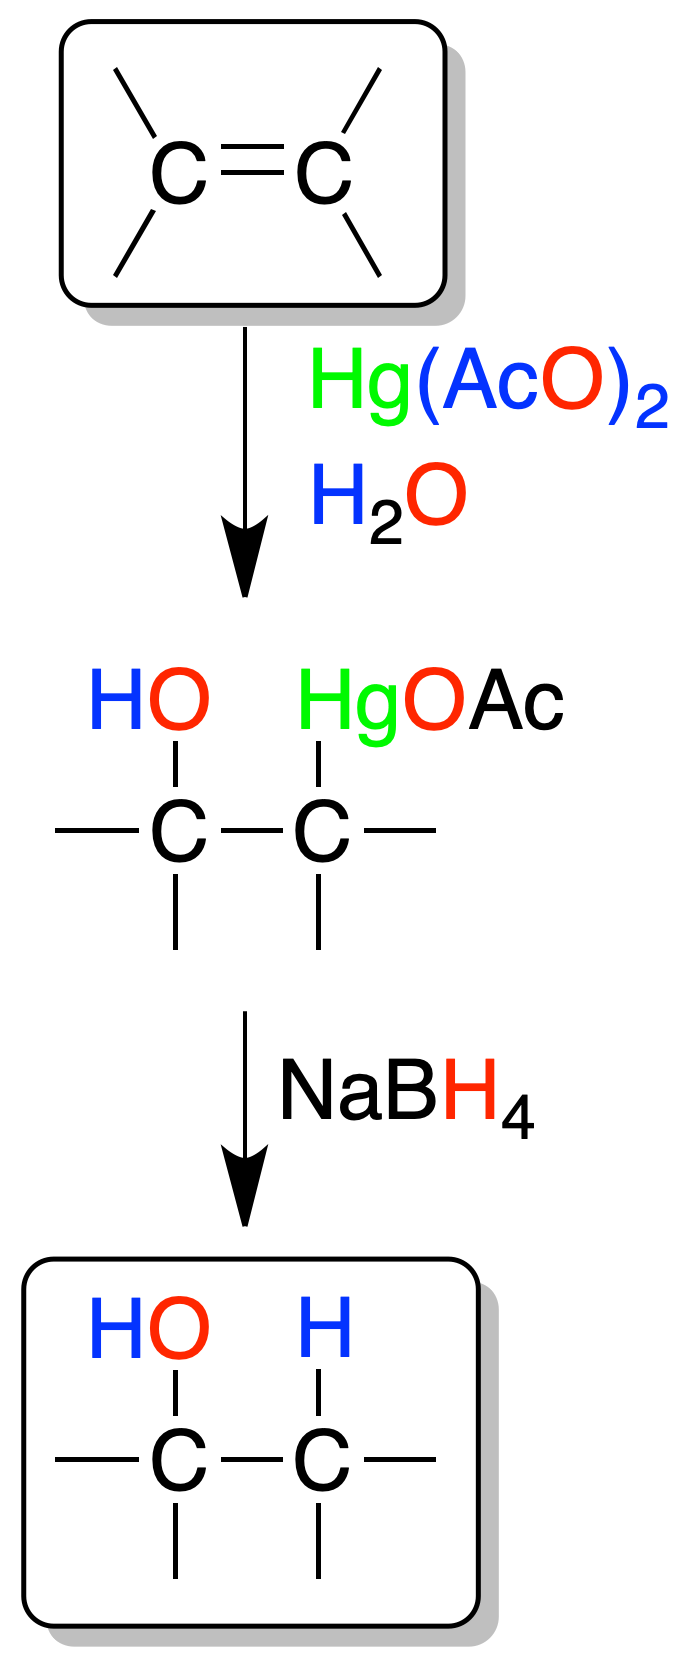 reactivity of alkenes: Oximercuriation-demercuriation